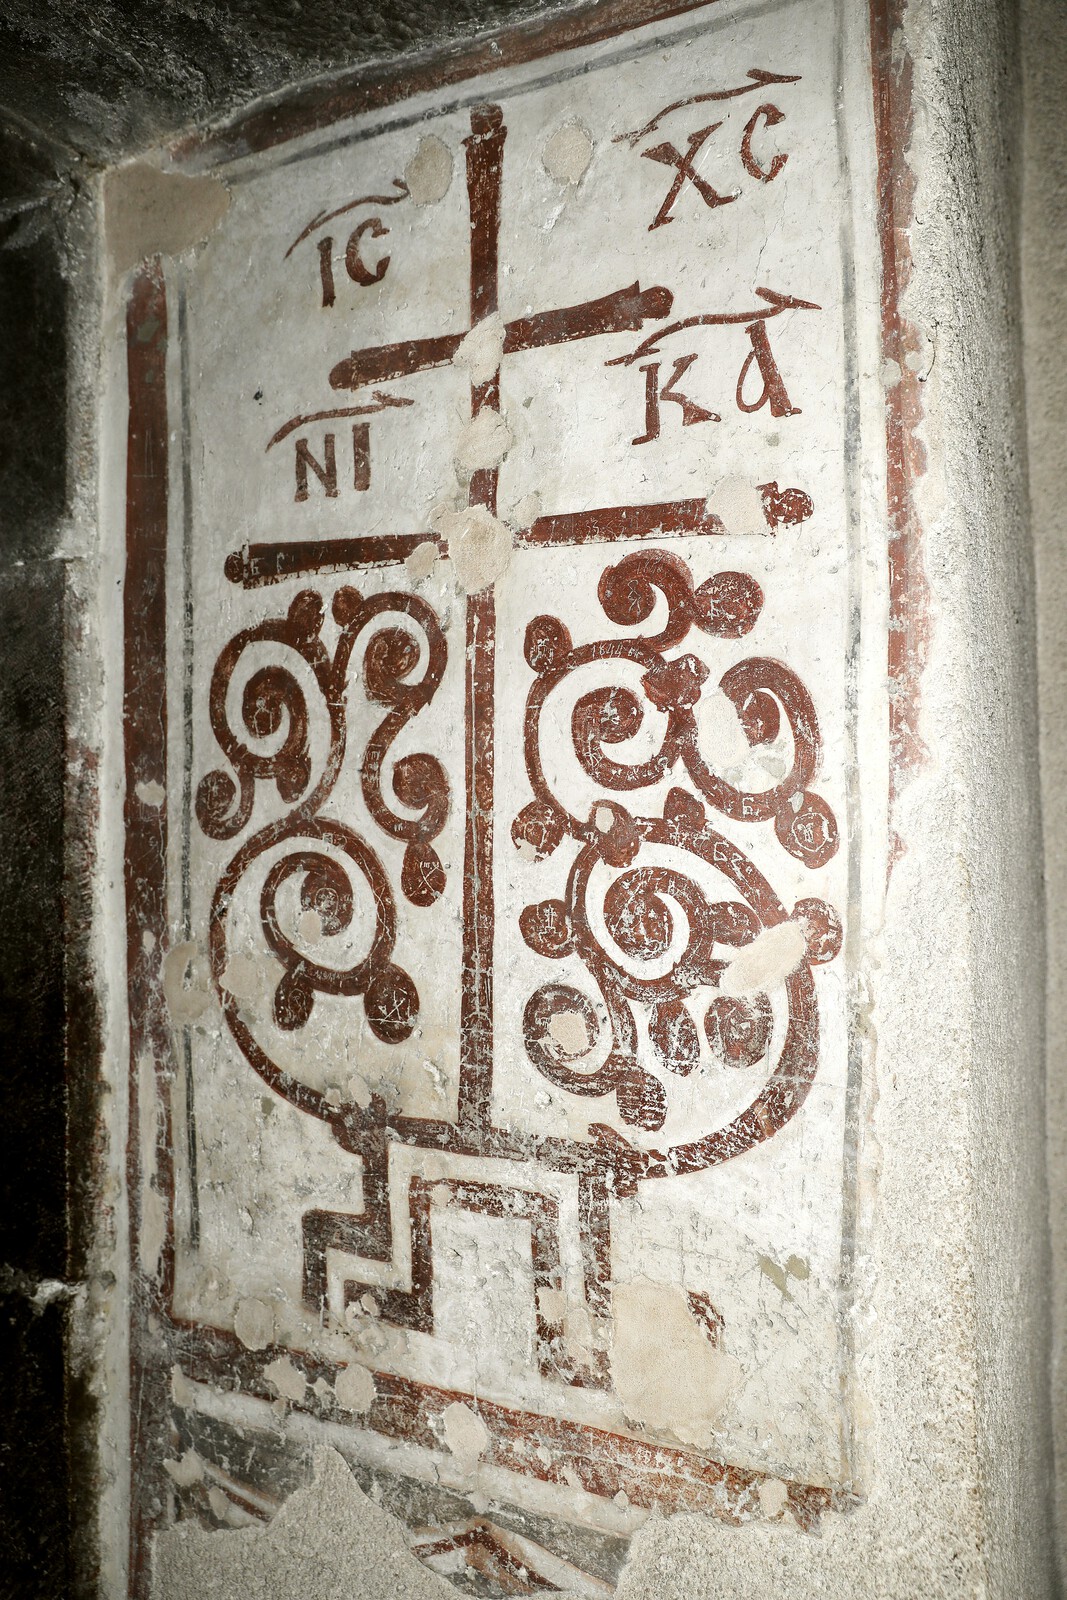 Foliate Cross with criptogrames